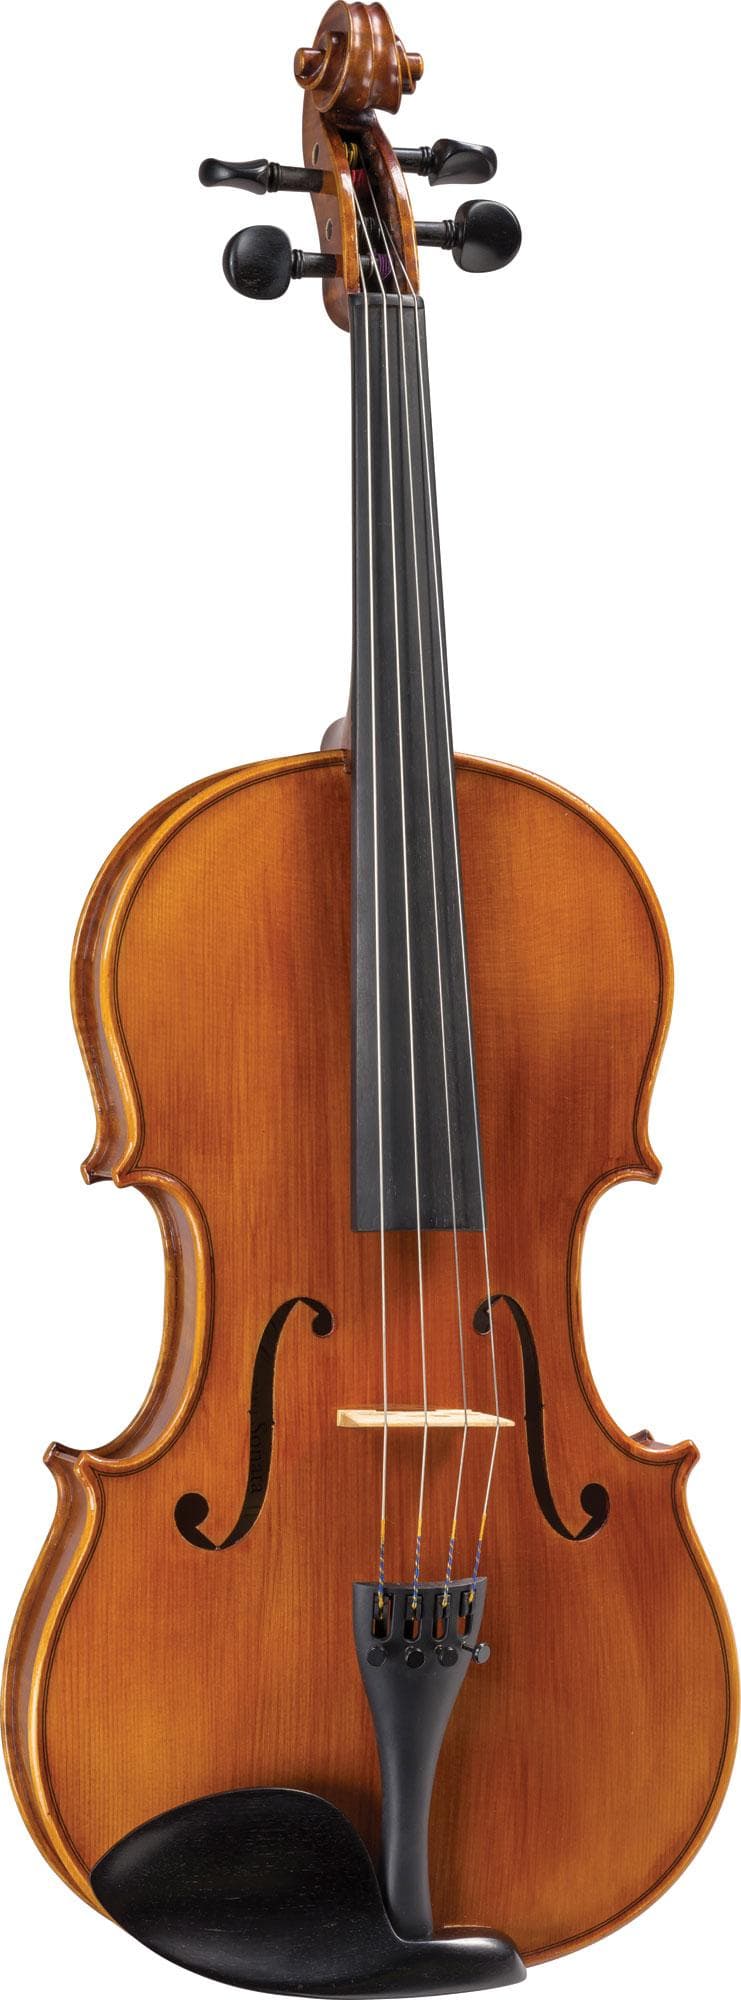 Viola u0026 Wang Artisto: String Instruments u0026 Accessories